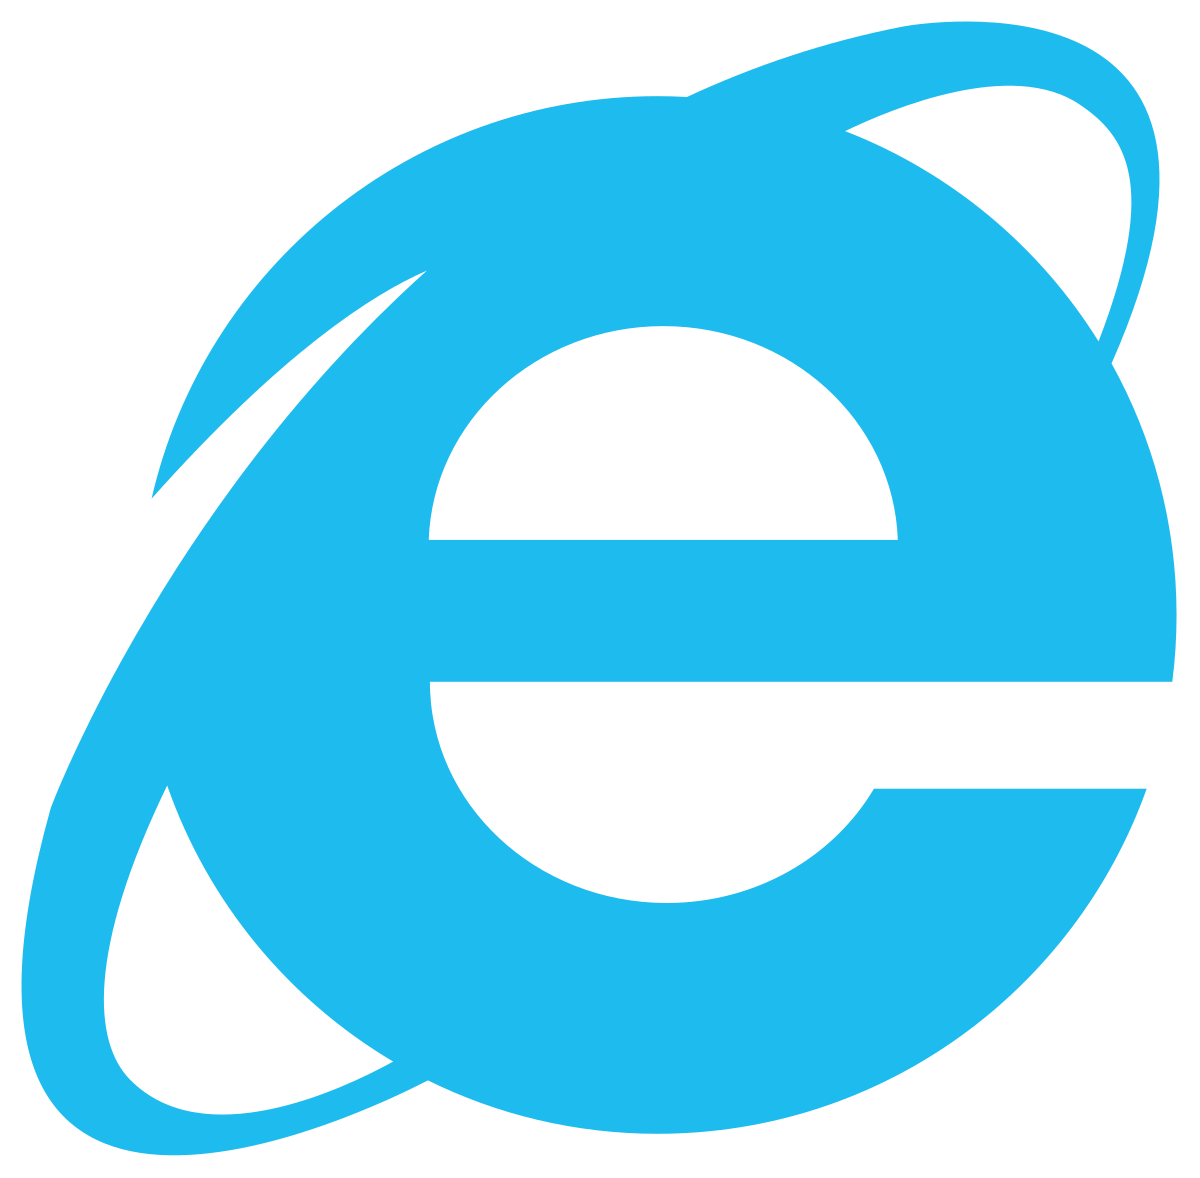 Internet Explorer icon in safe mode